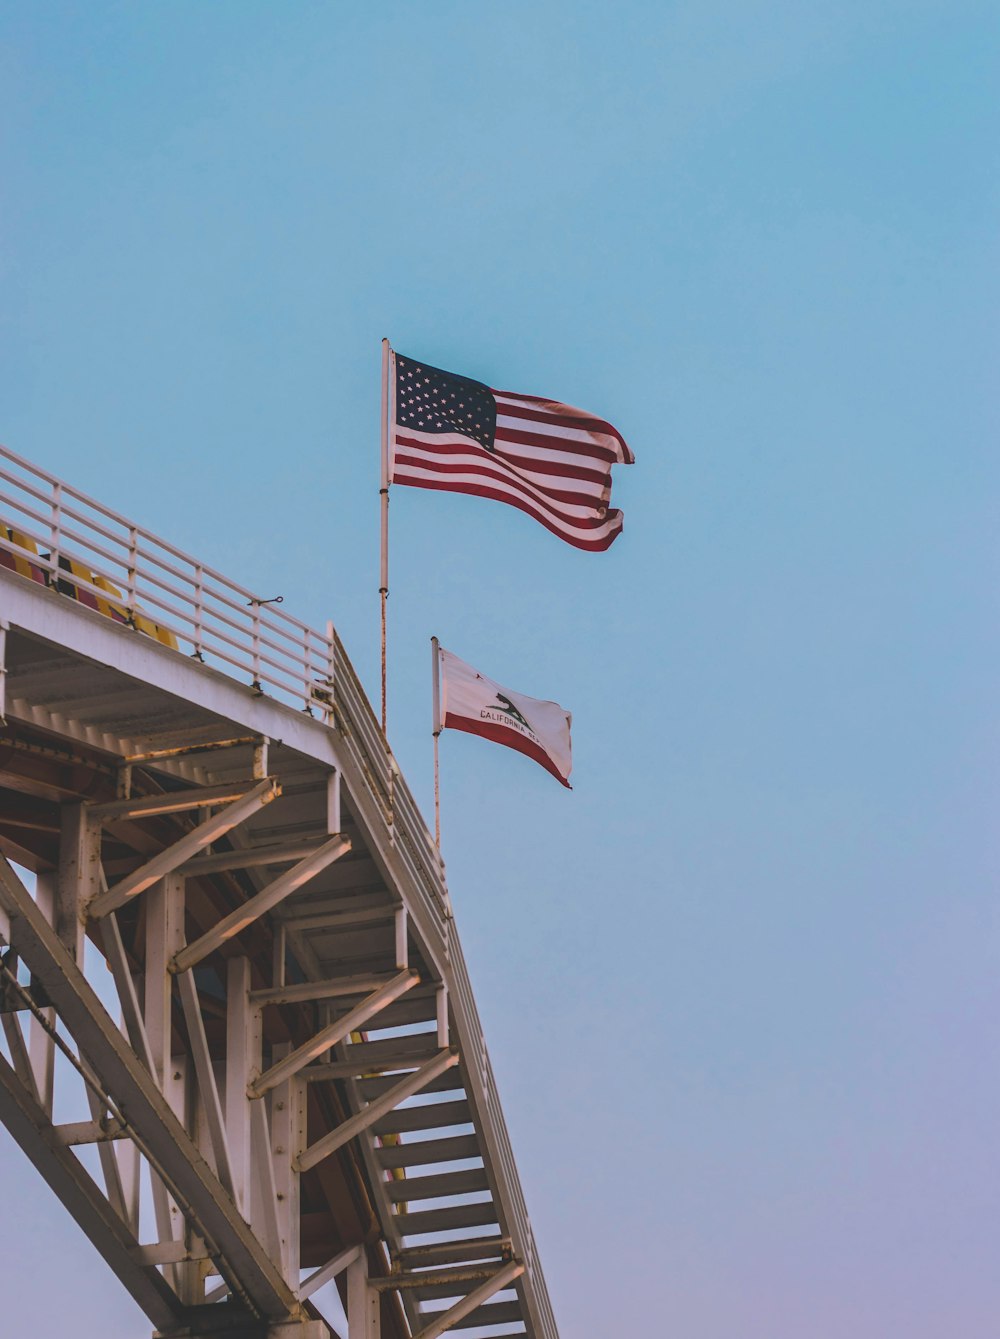 USA flag on wooden bridge